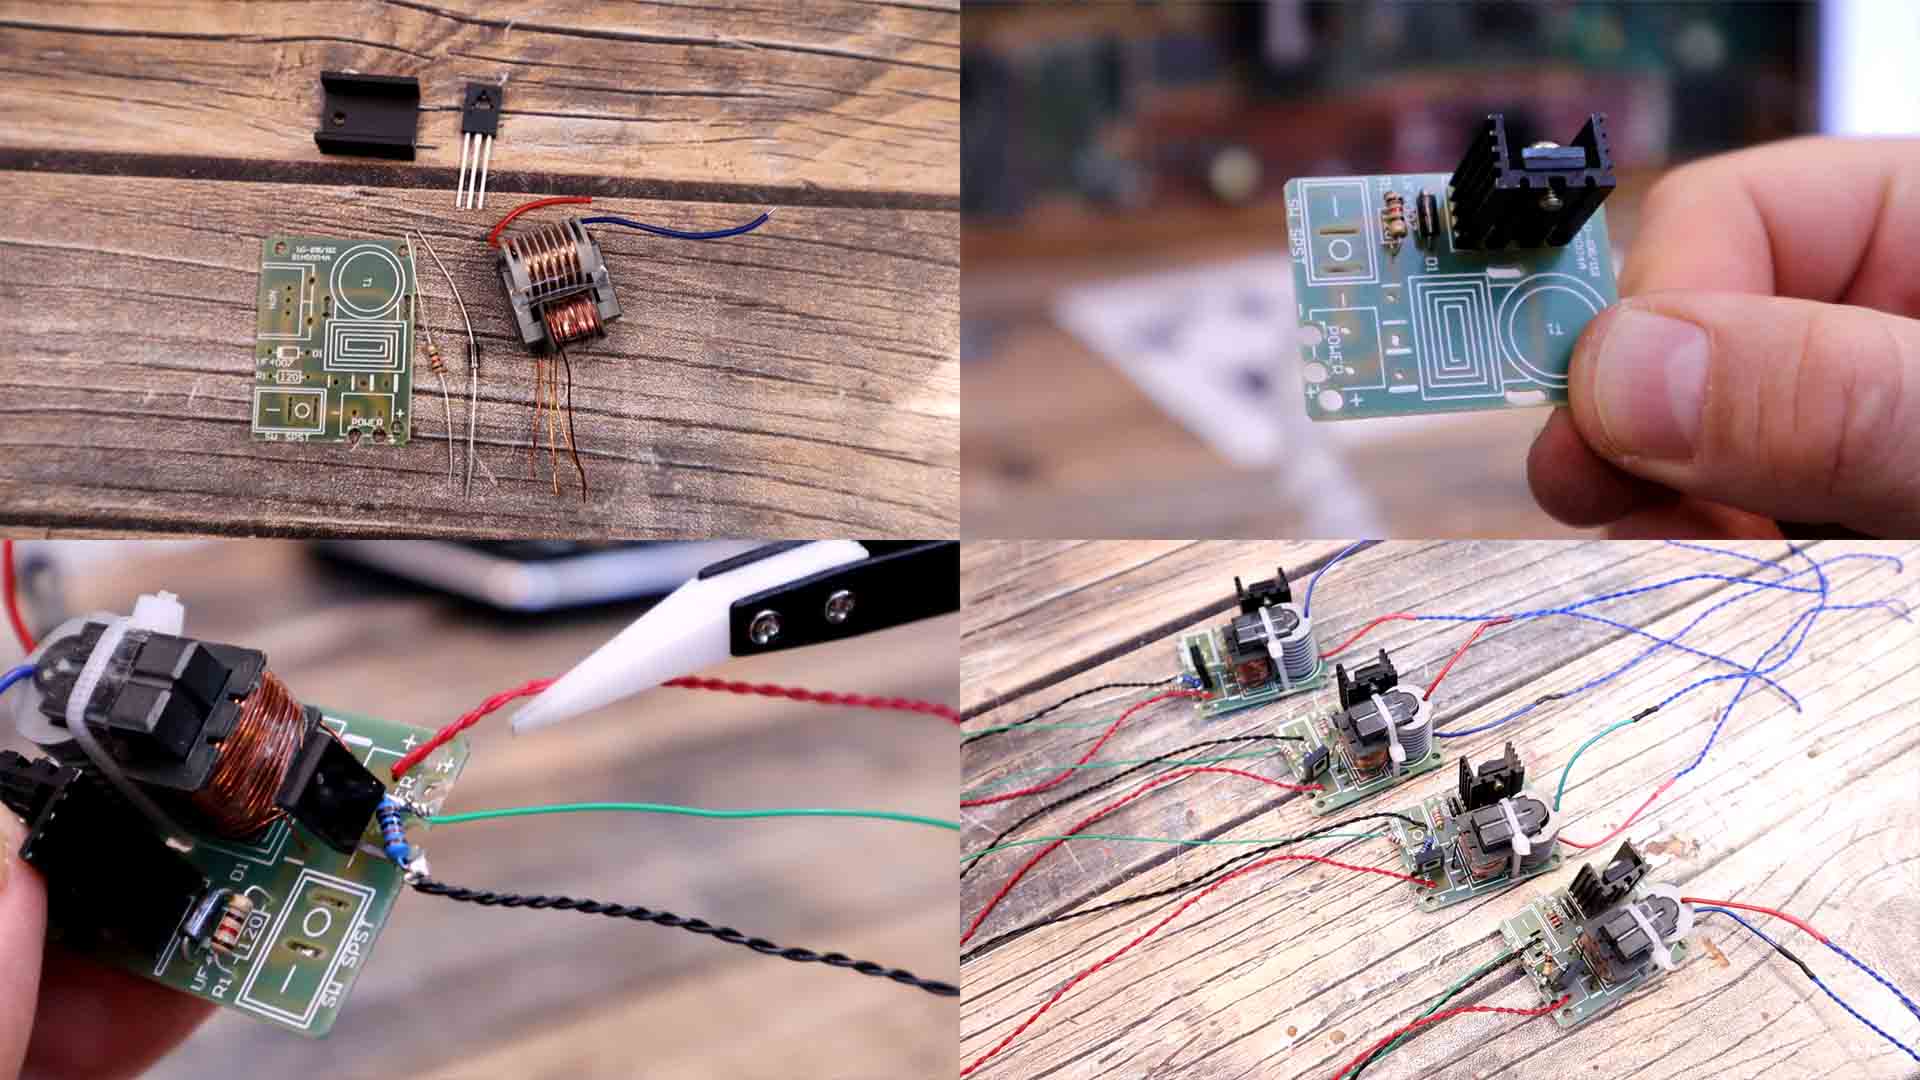 homemade shocking game voltage zap lie detector